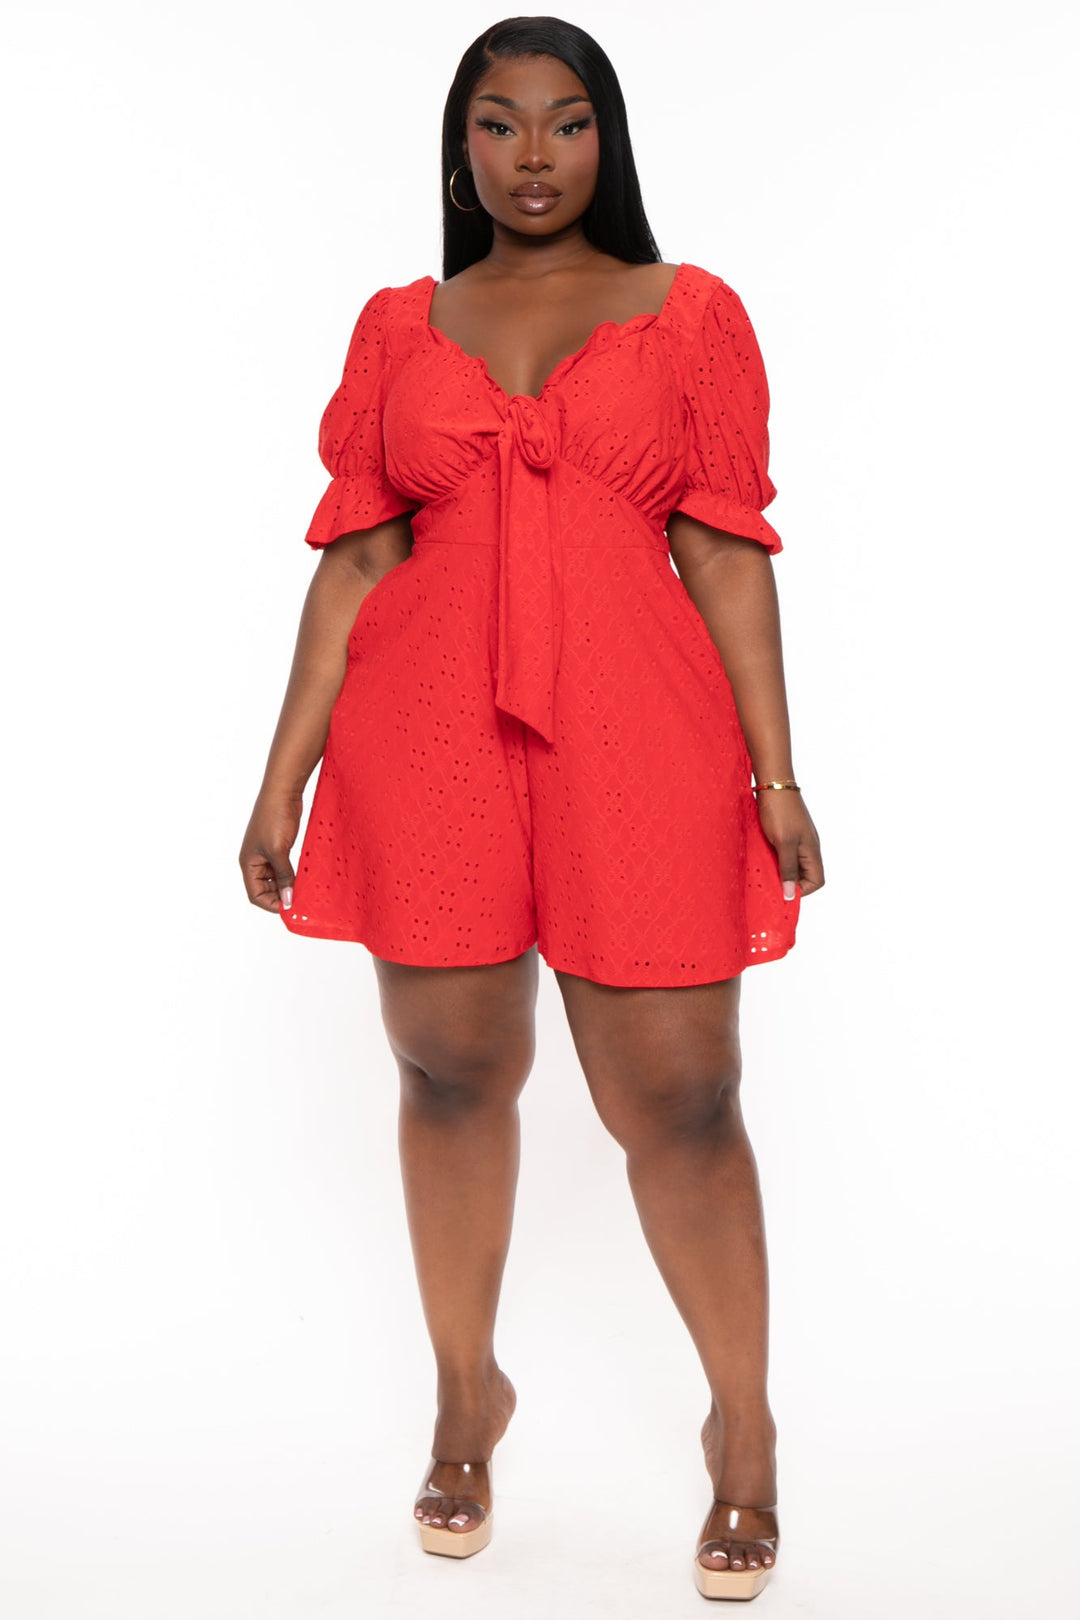 Curvy Sense Dresses 1X / Red Plus Size Jenni Eyelet Romper  - Red